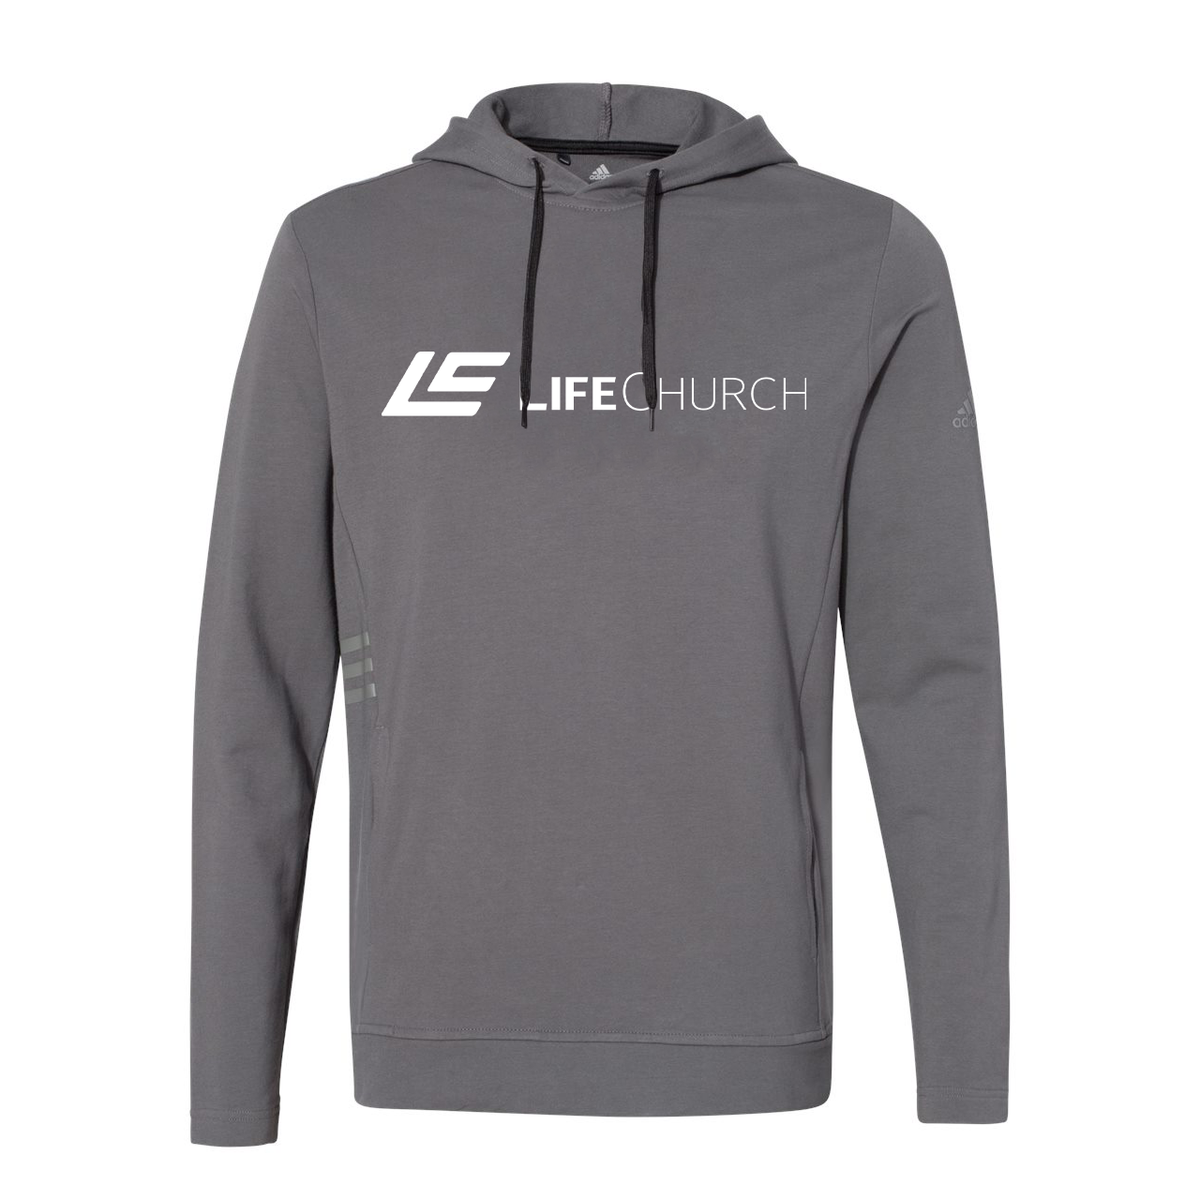 Life Church Adidas Lightweight Sweatshirt